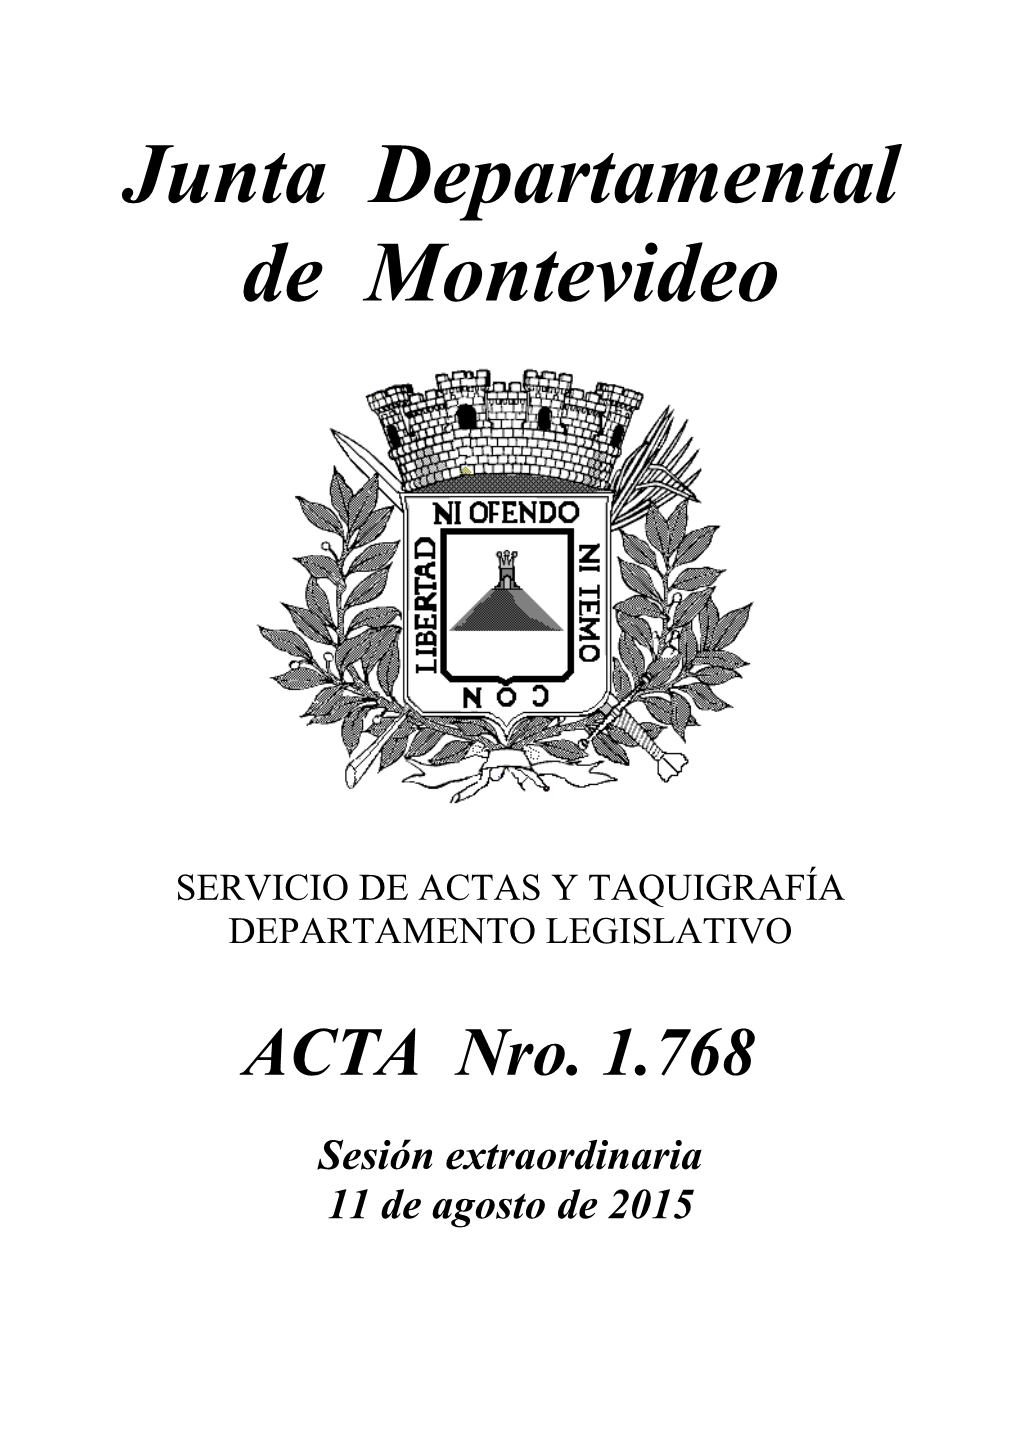 Junta Departamental De Montevideo